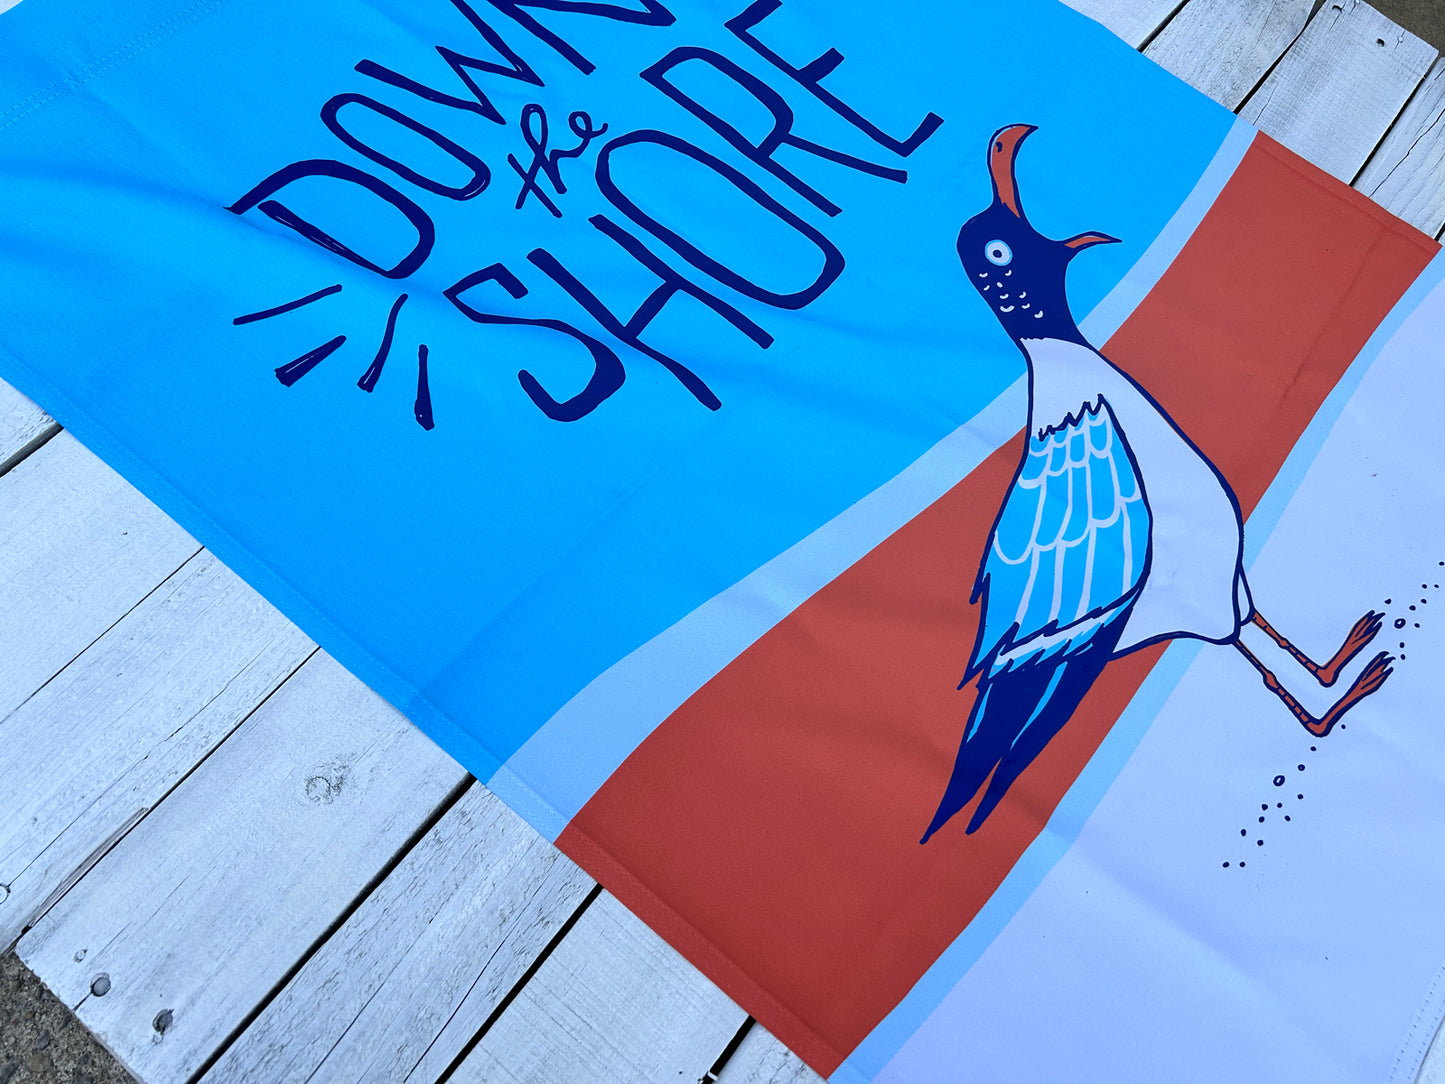 Down The Shore Seagull Dorm Flag